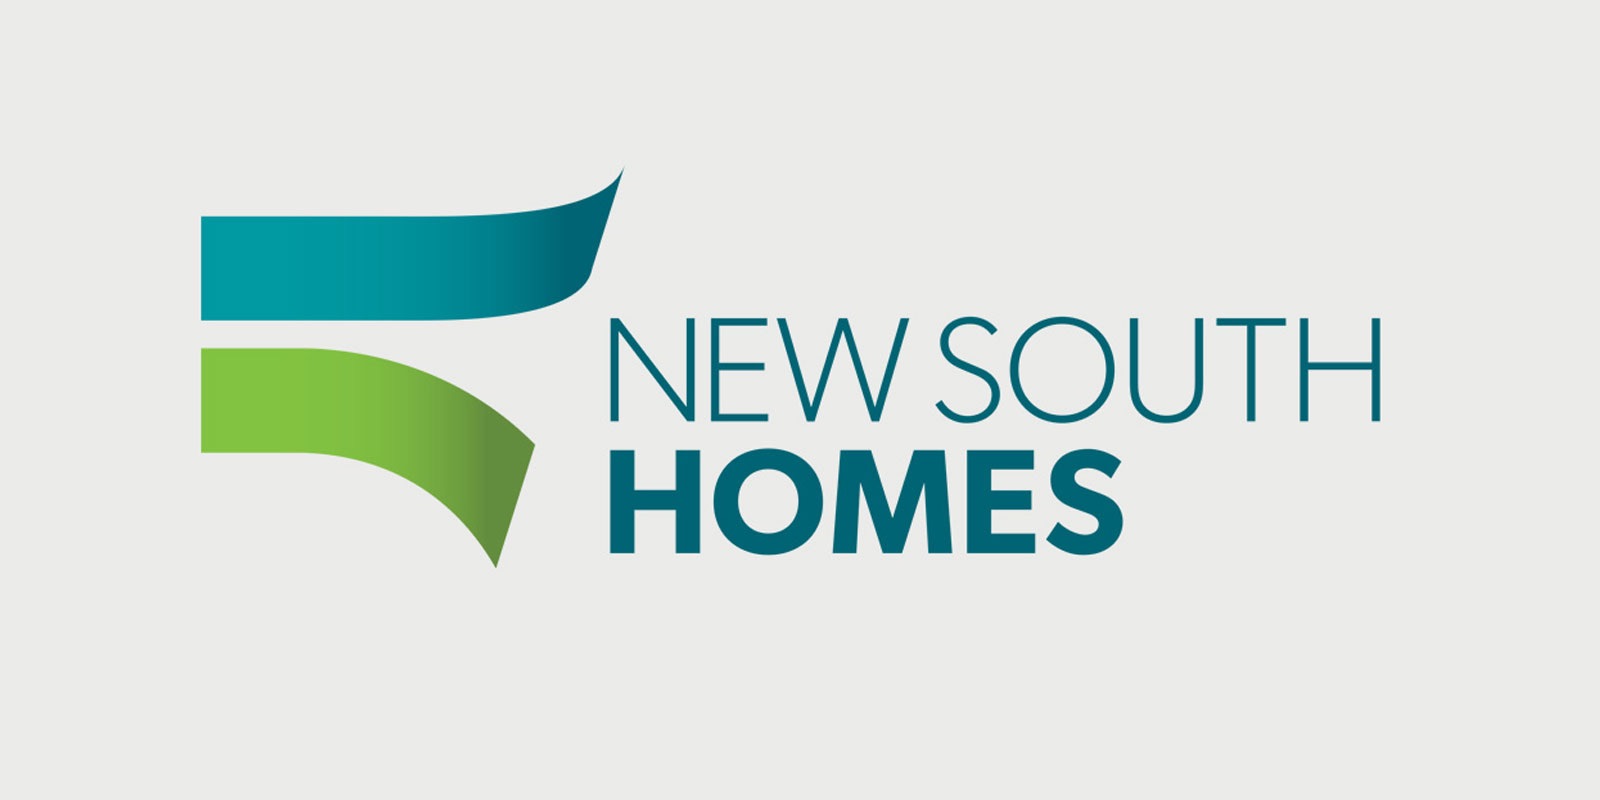 New South Homes logo